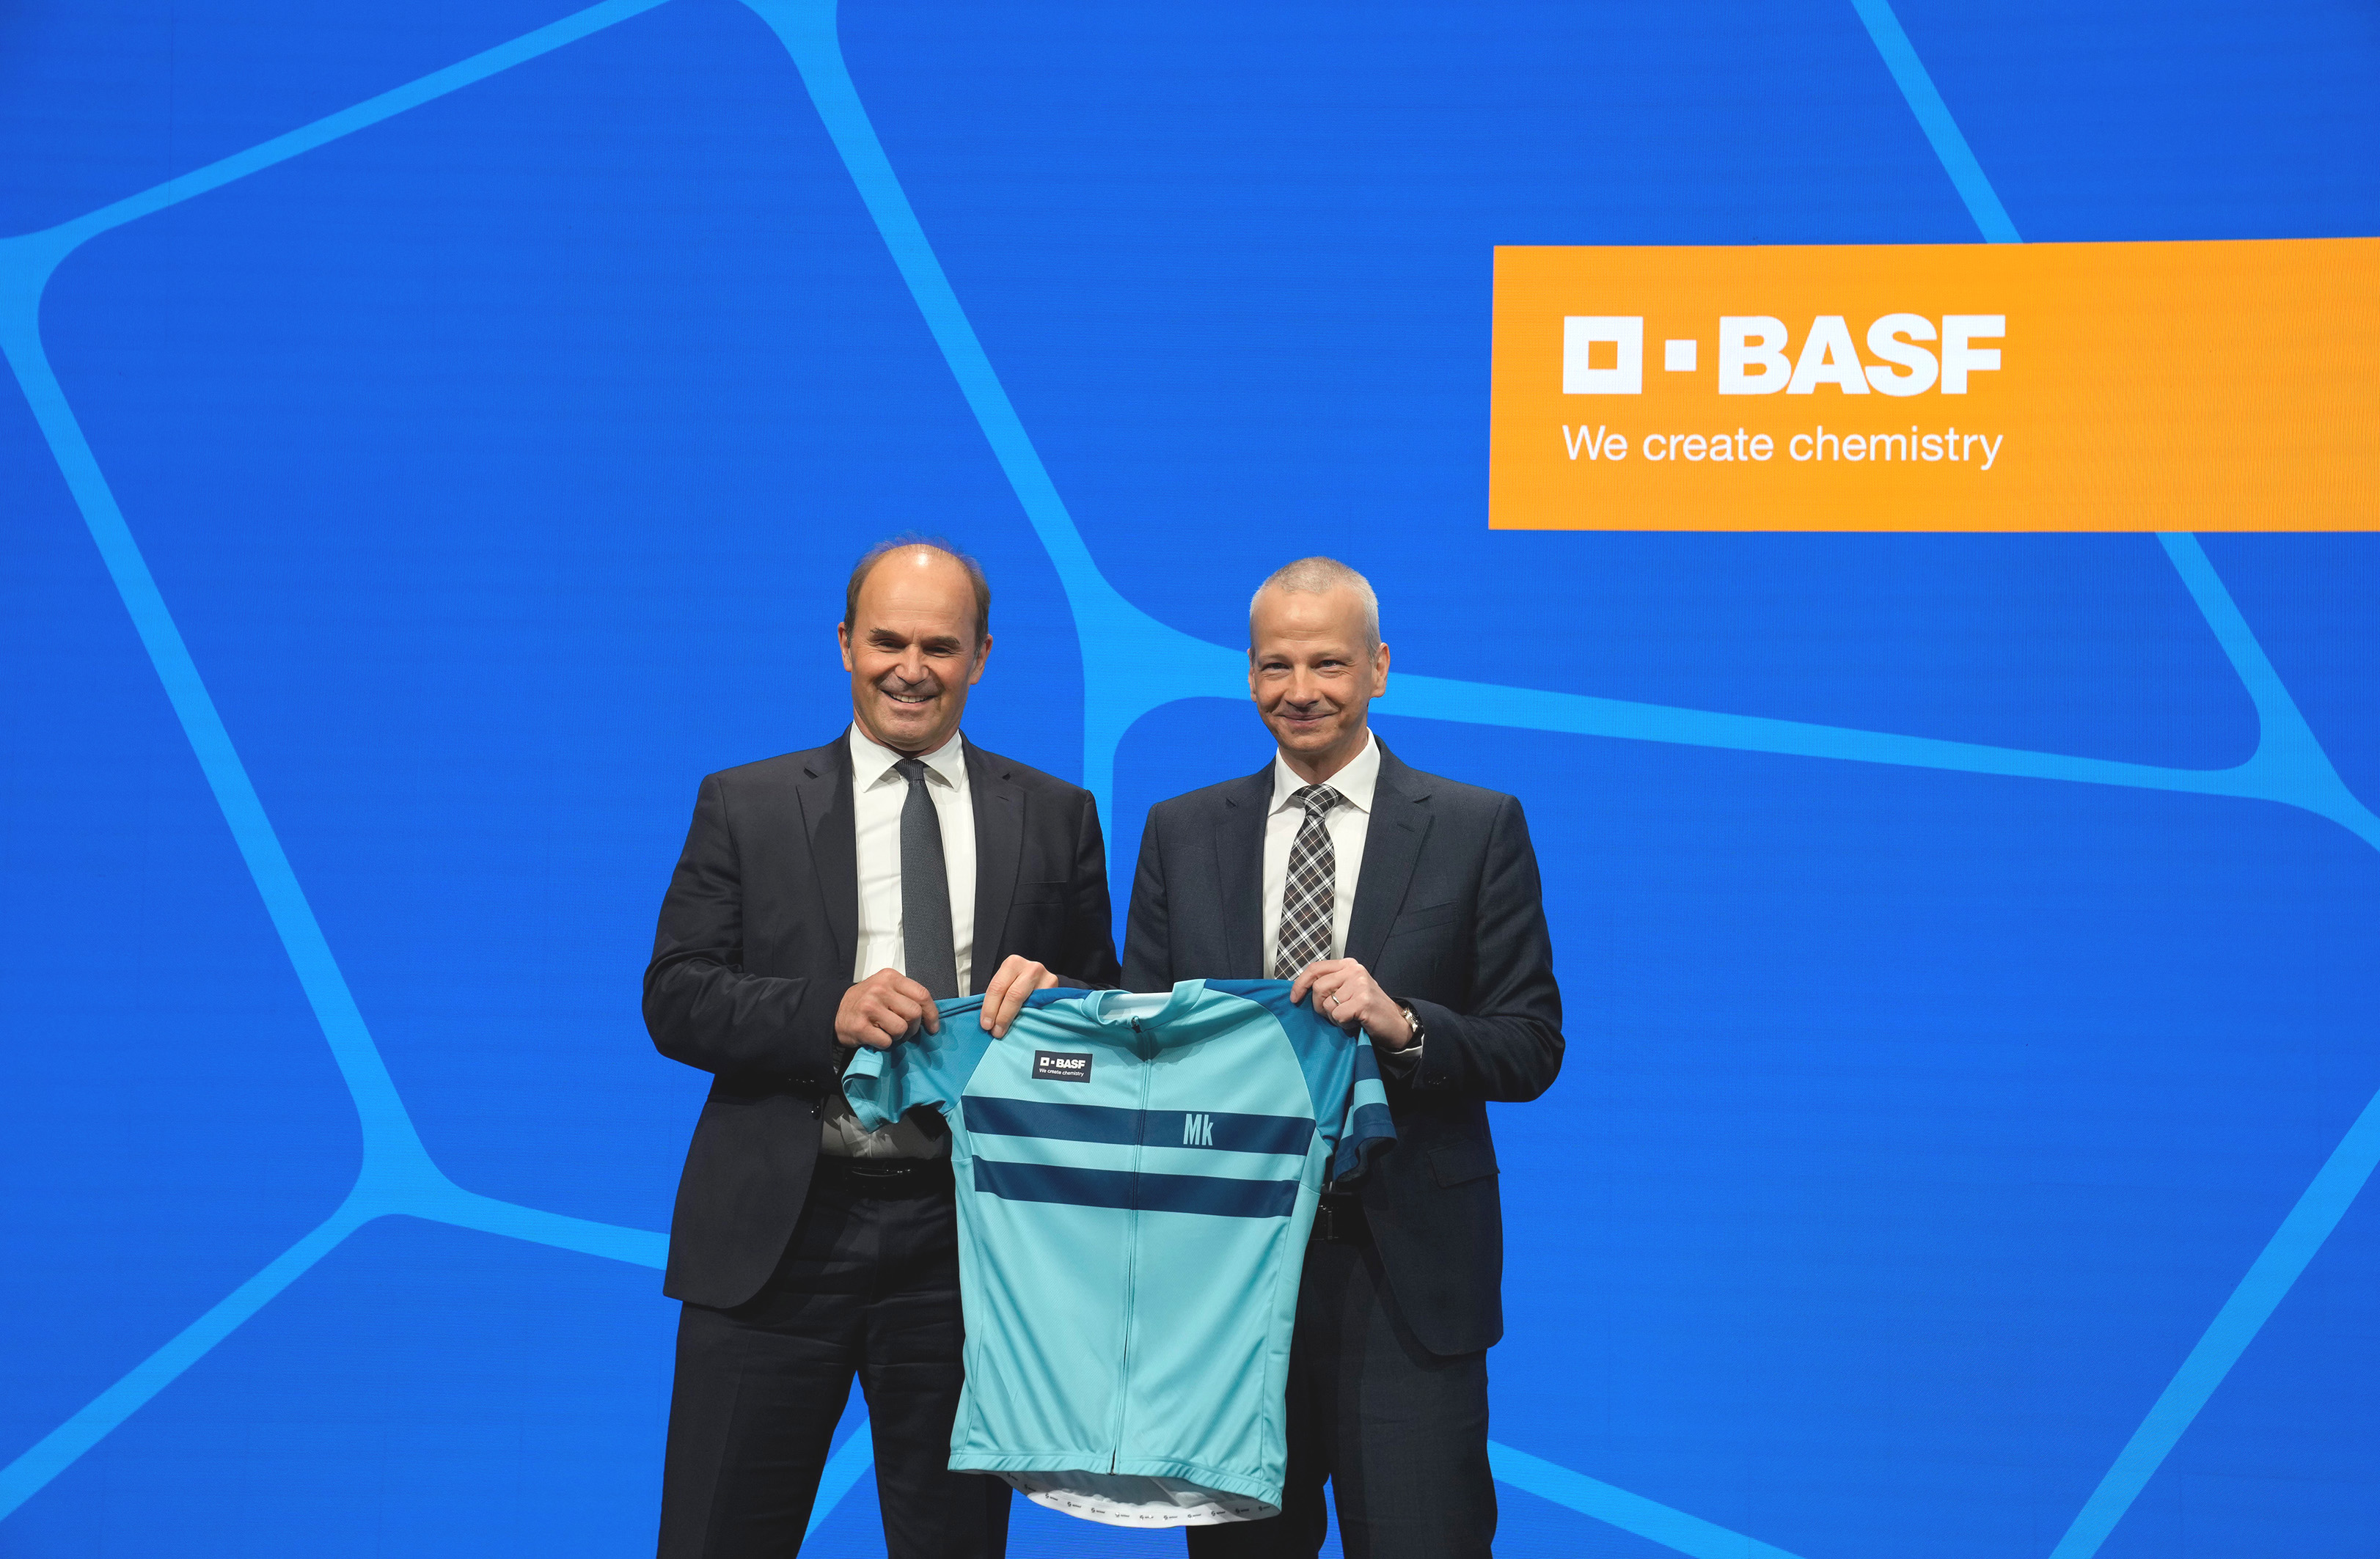 Vorstandswechsel bei BASF: Martin Brudermüller übergibt an Markus Kamieth / New CEO at BASF: Martin Brudermüller hands over to Markus Kamieth